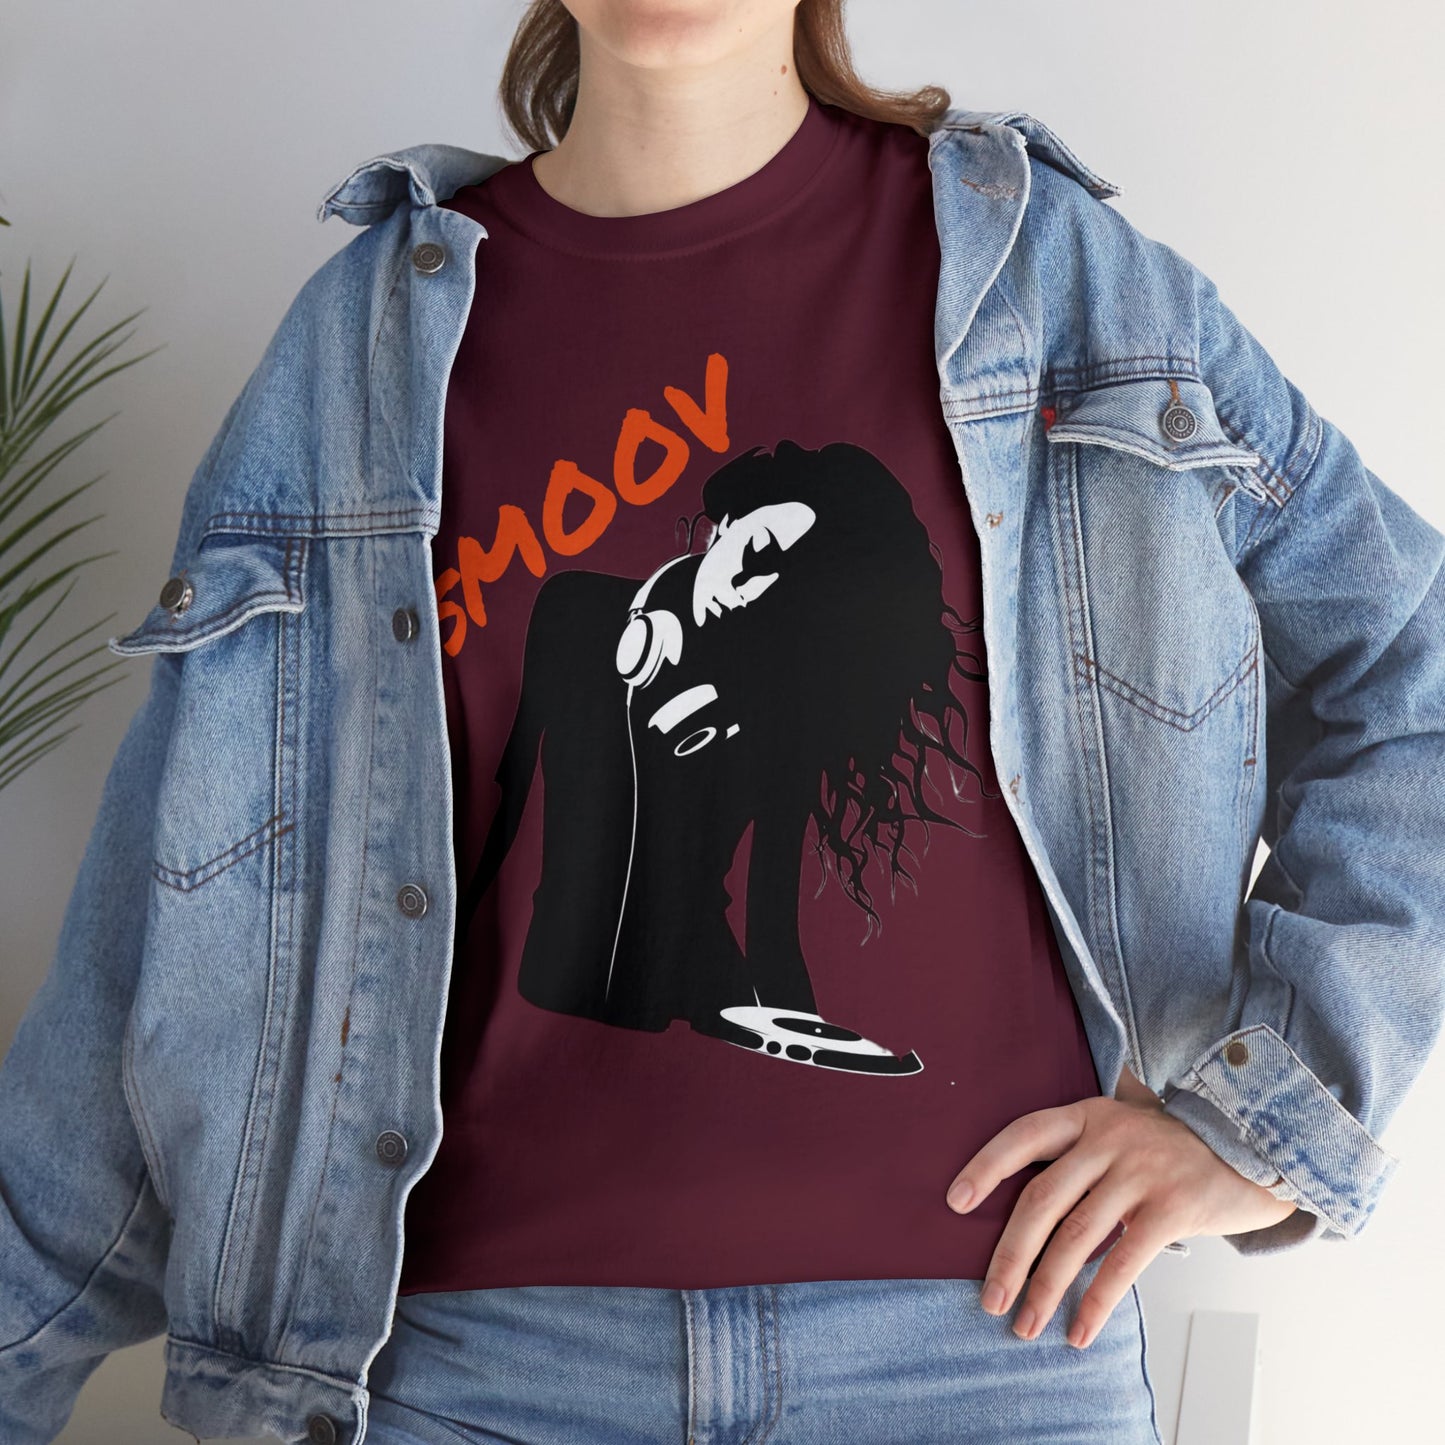 Smoov Artist DJ Unisex Heavy Cotton T-Shirt